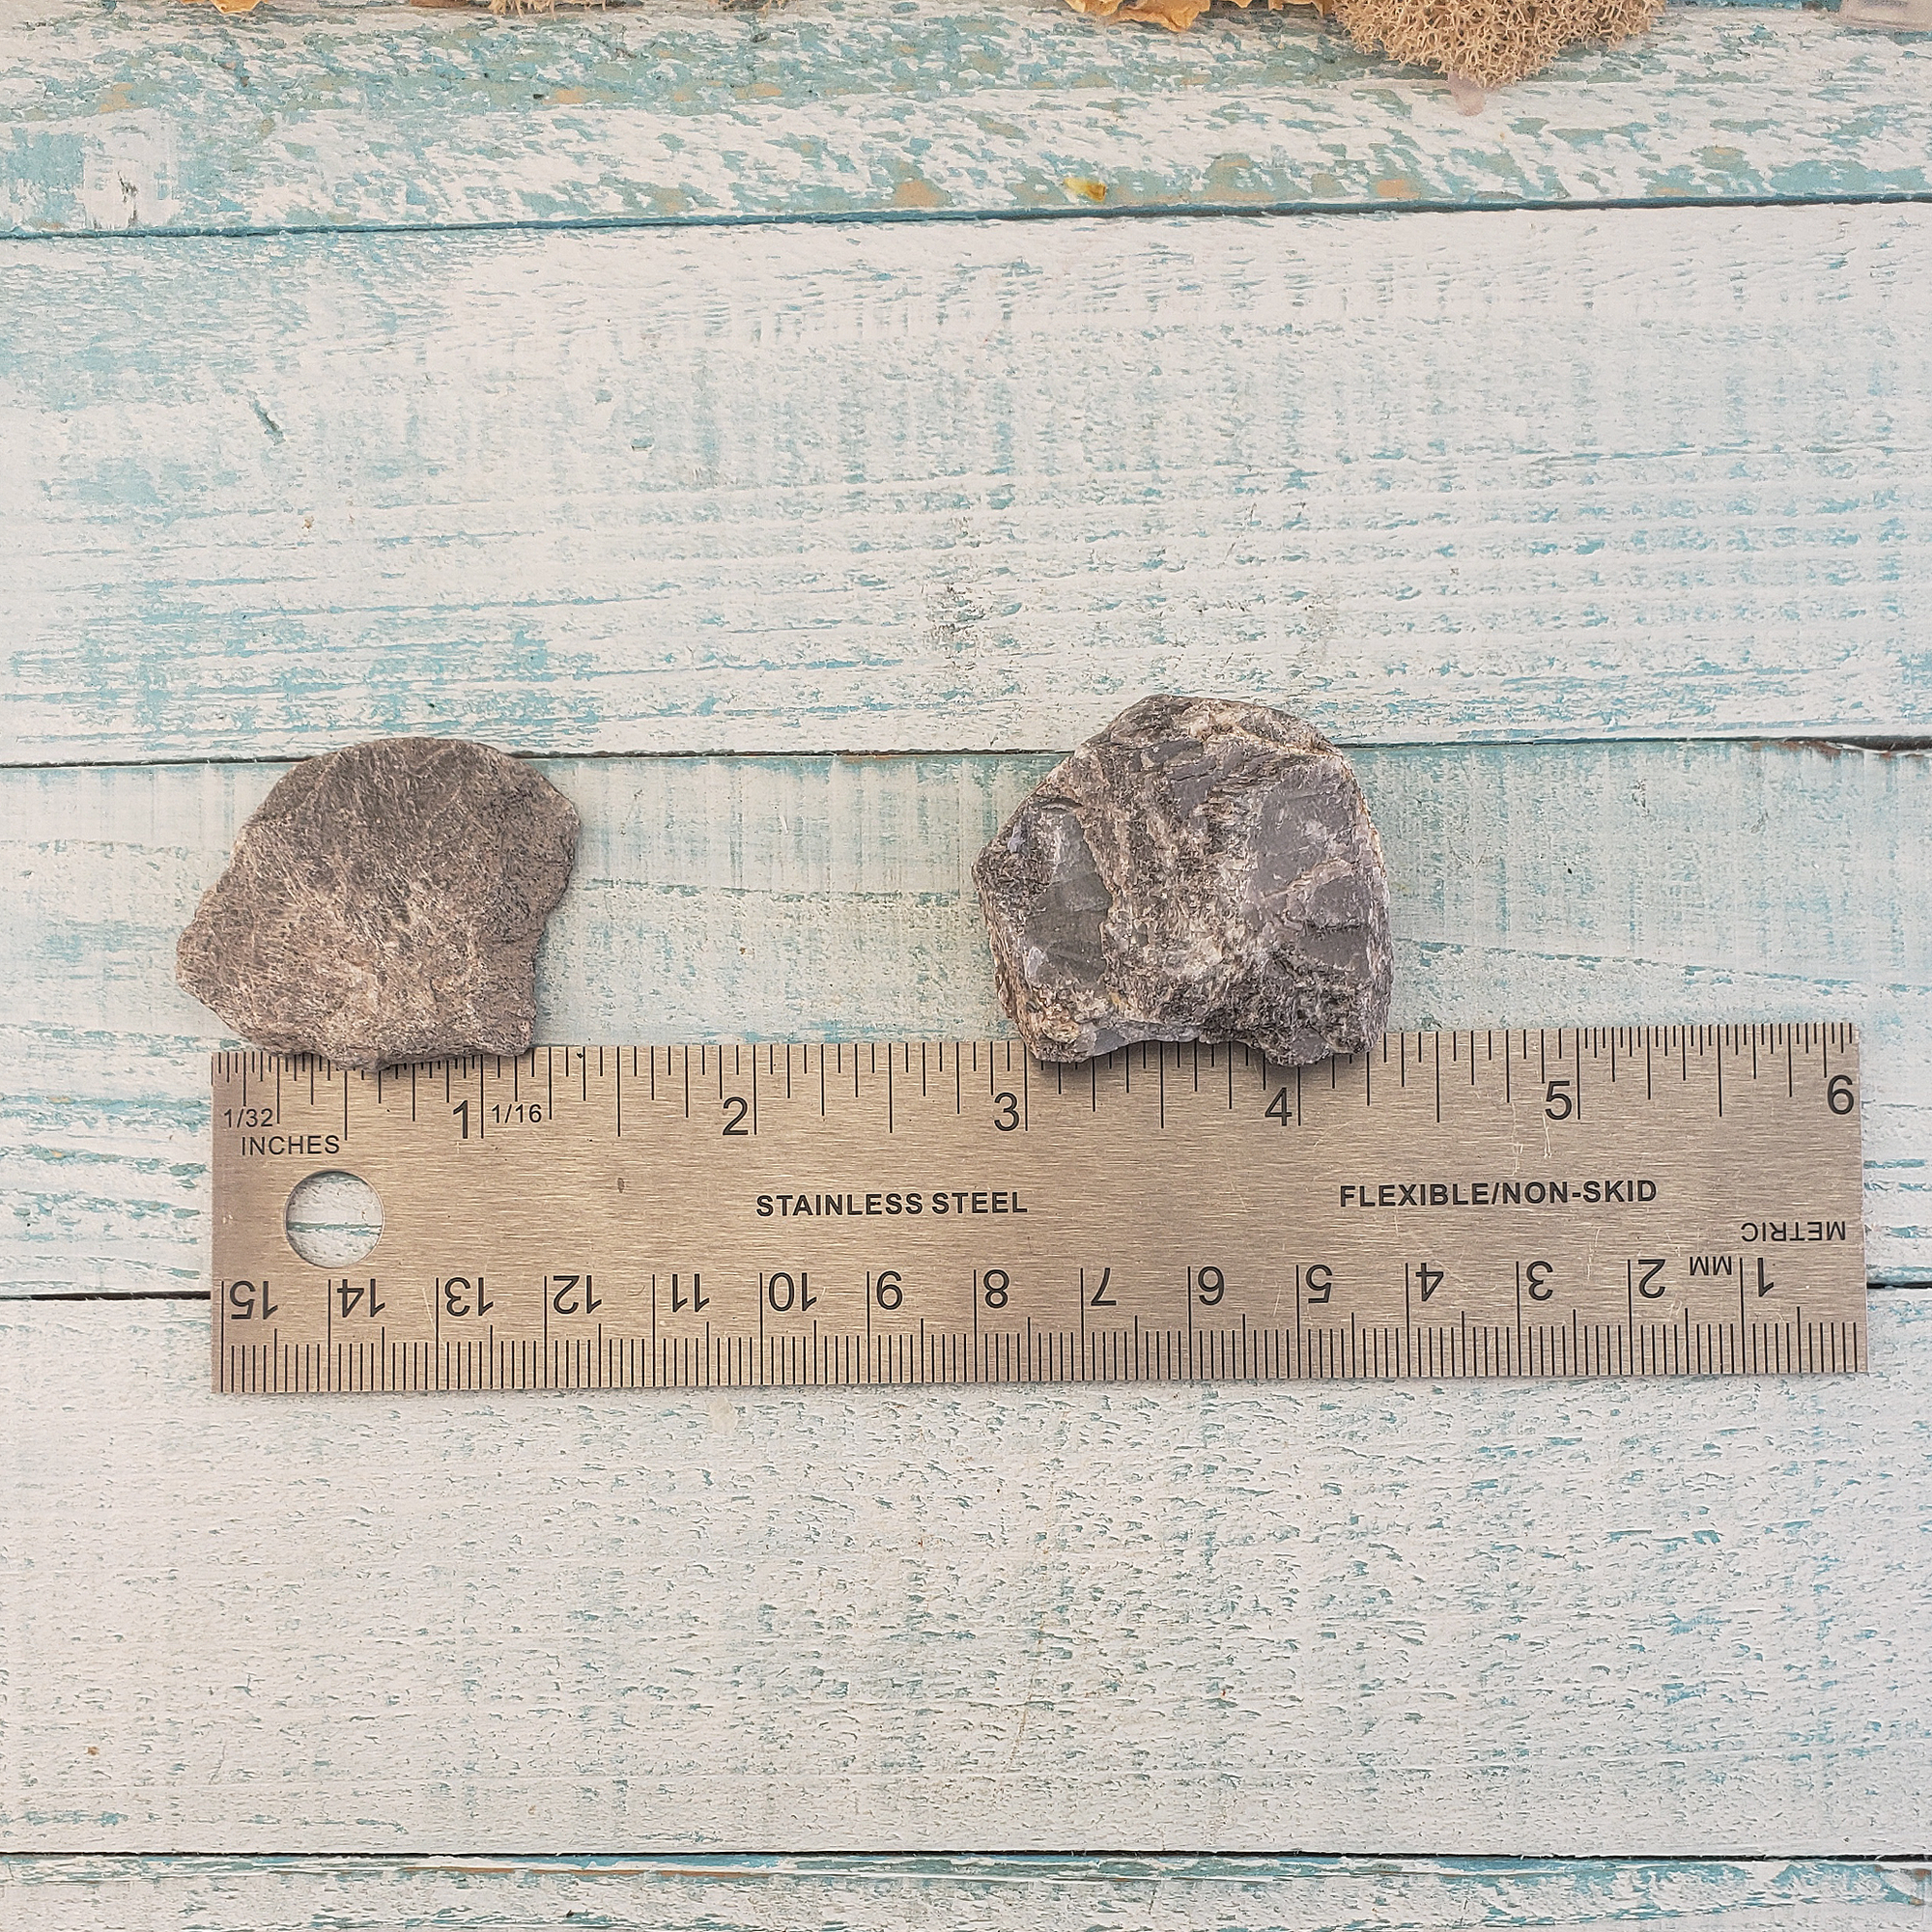 Raw Sapphire Corundum Rough Gemstone Natural Crystal - Measurement